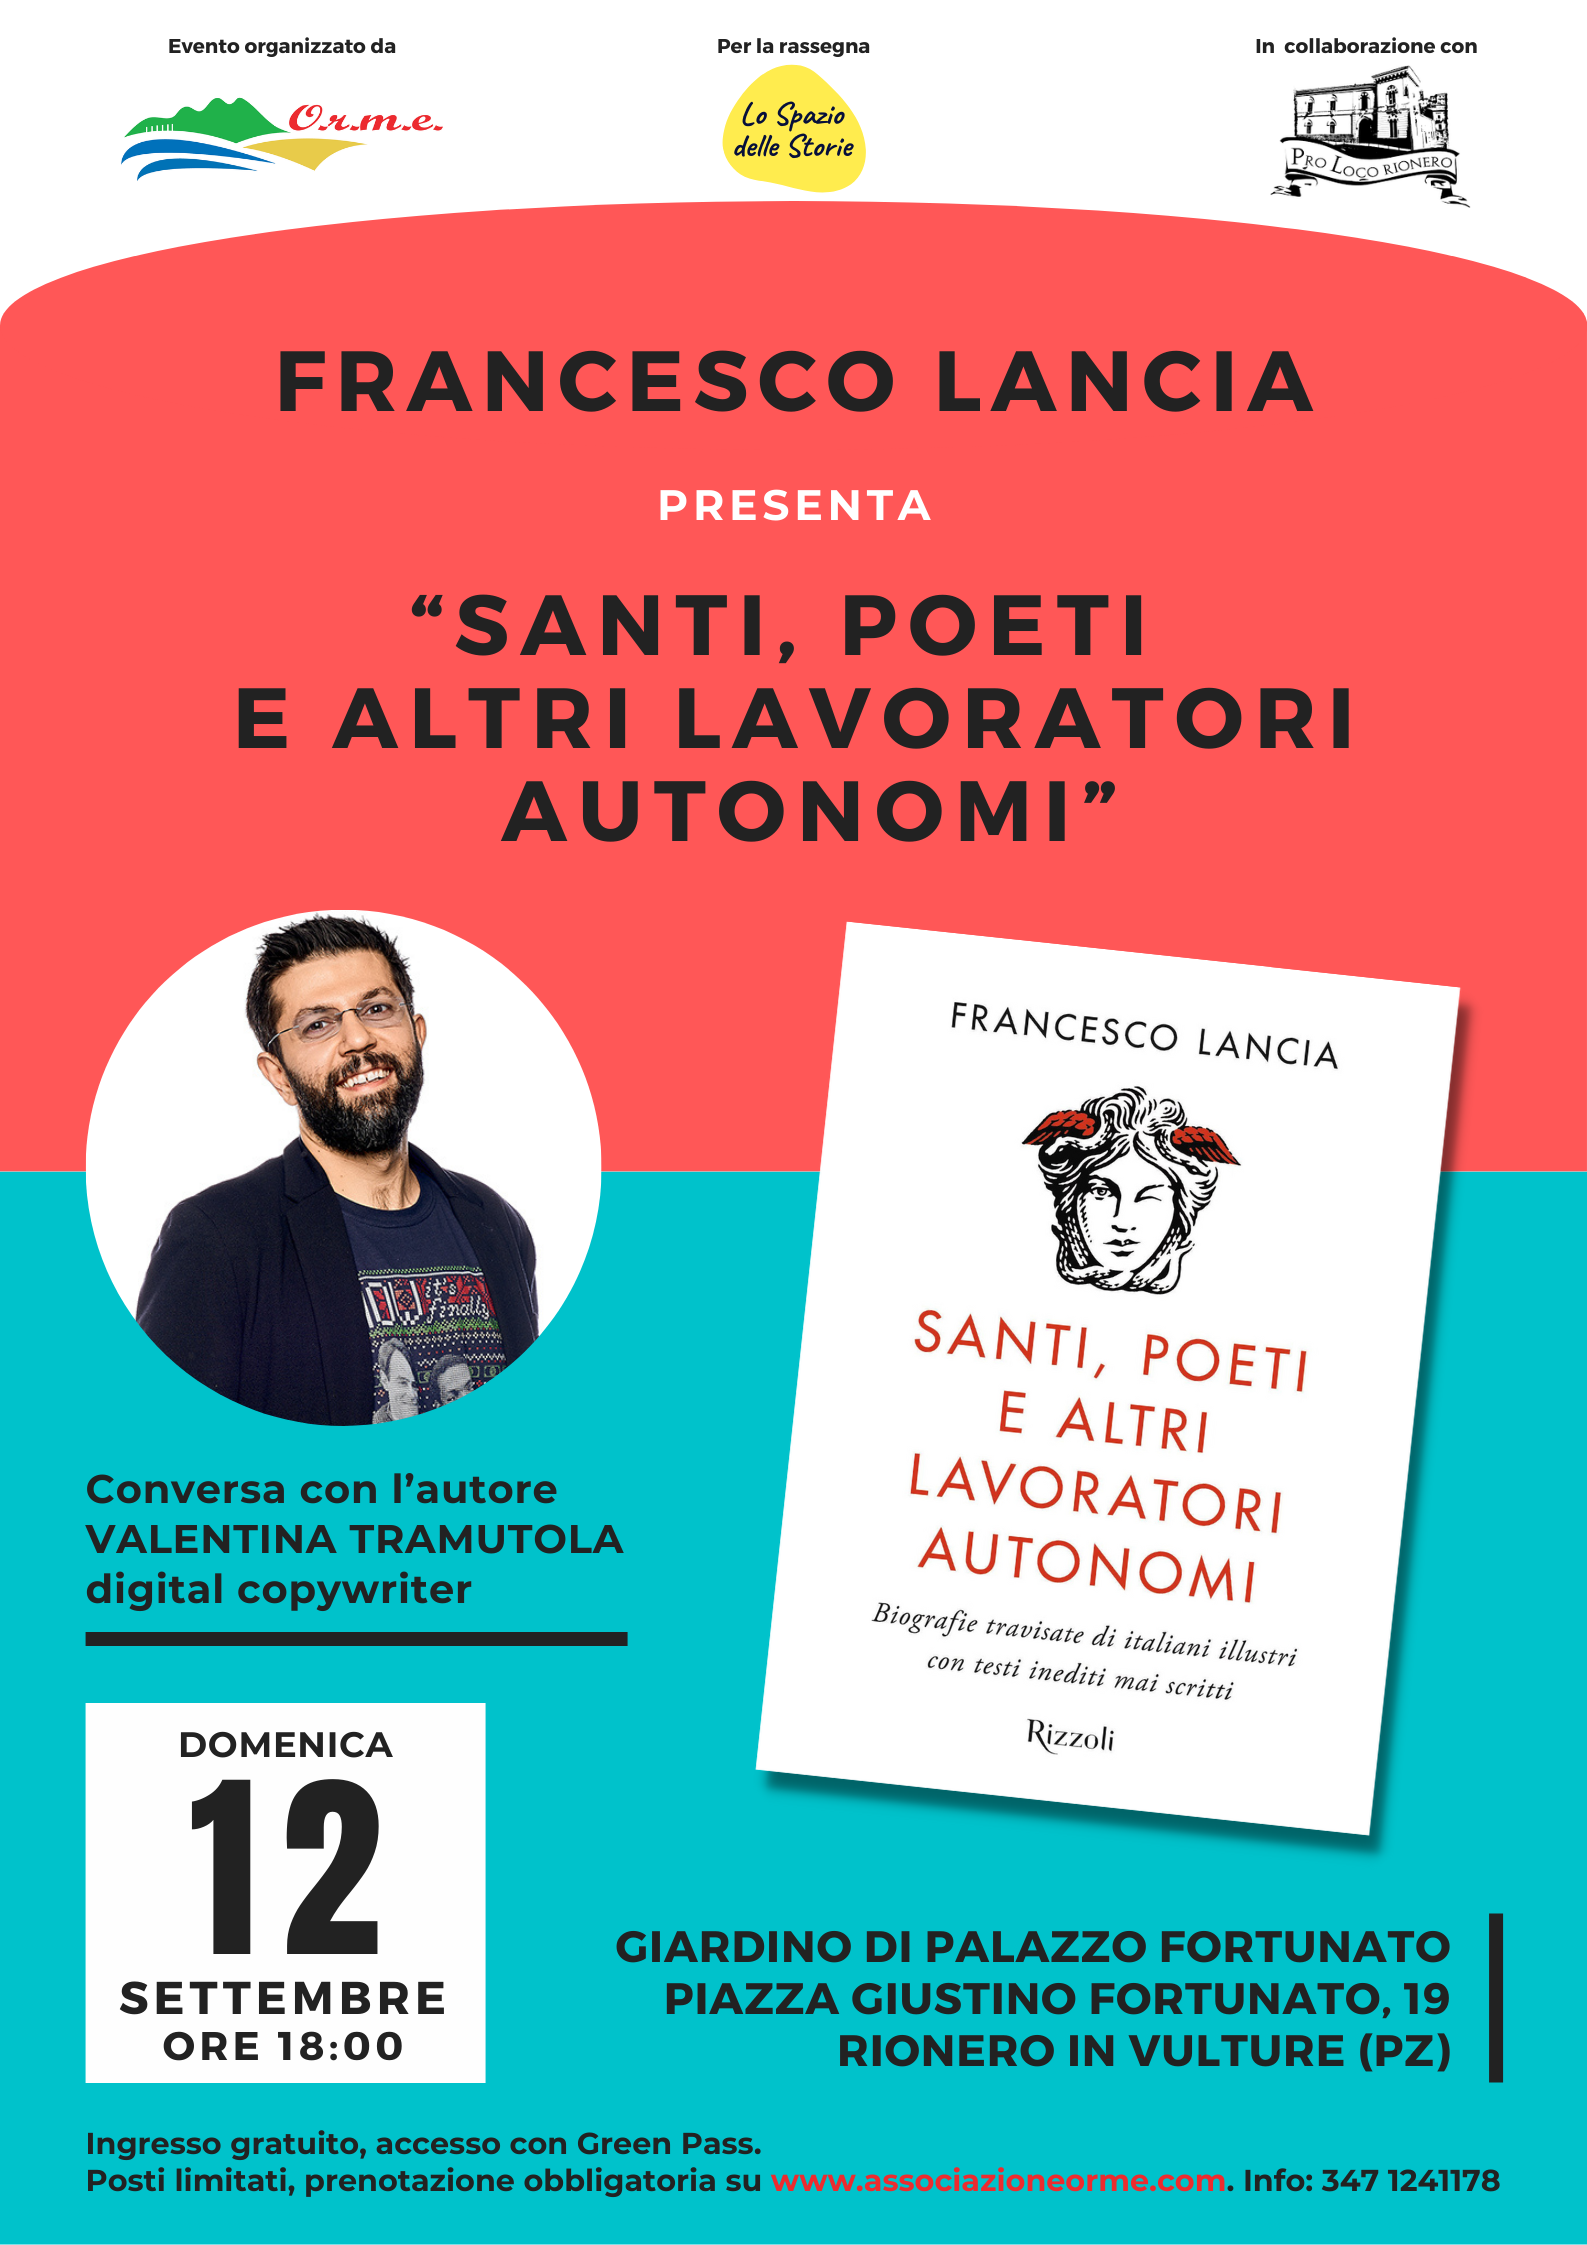 Francesco Lancia presenta “Santi, poeti e altri lavoratori autonomi”